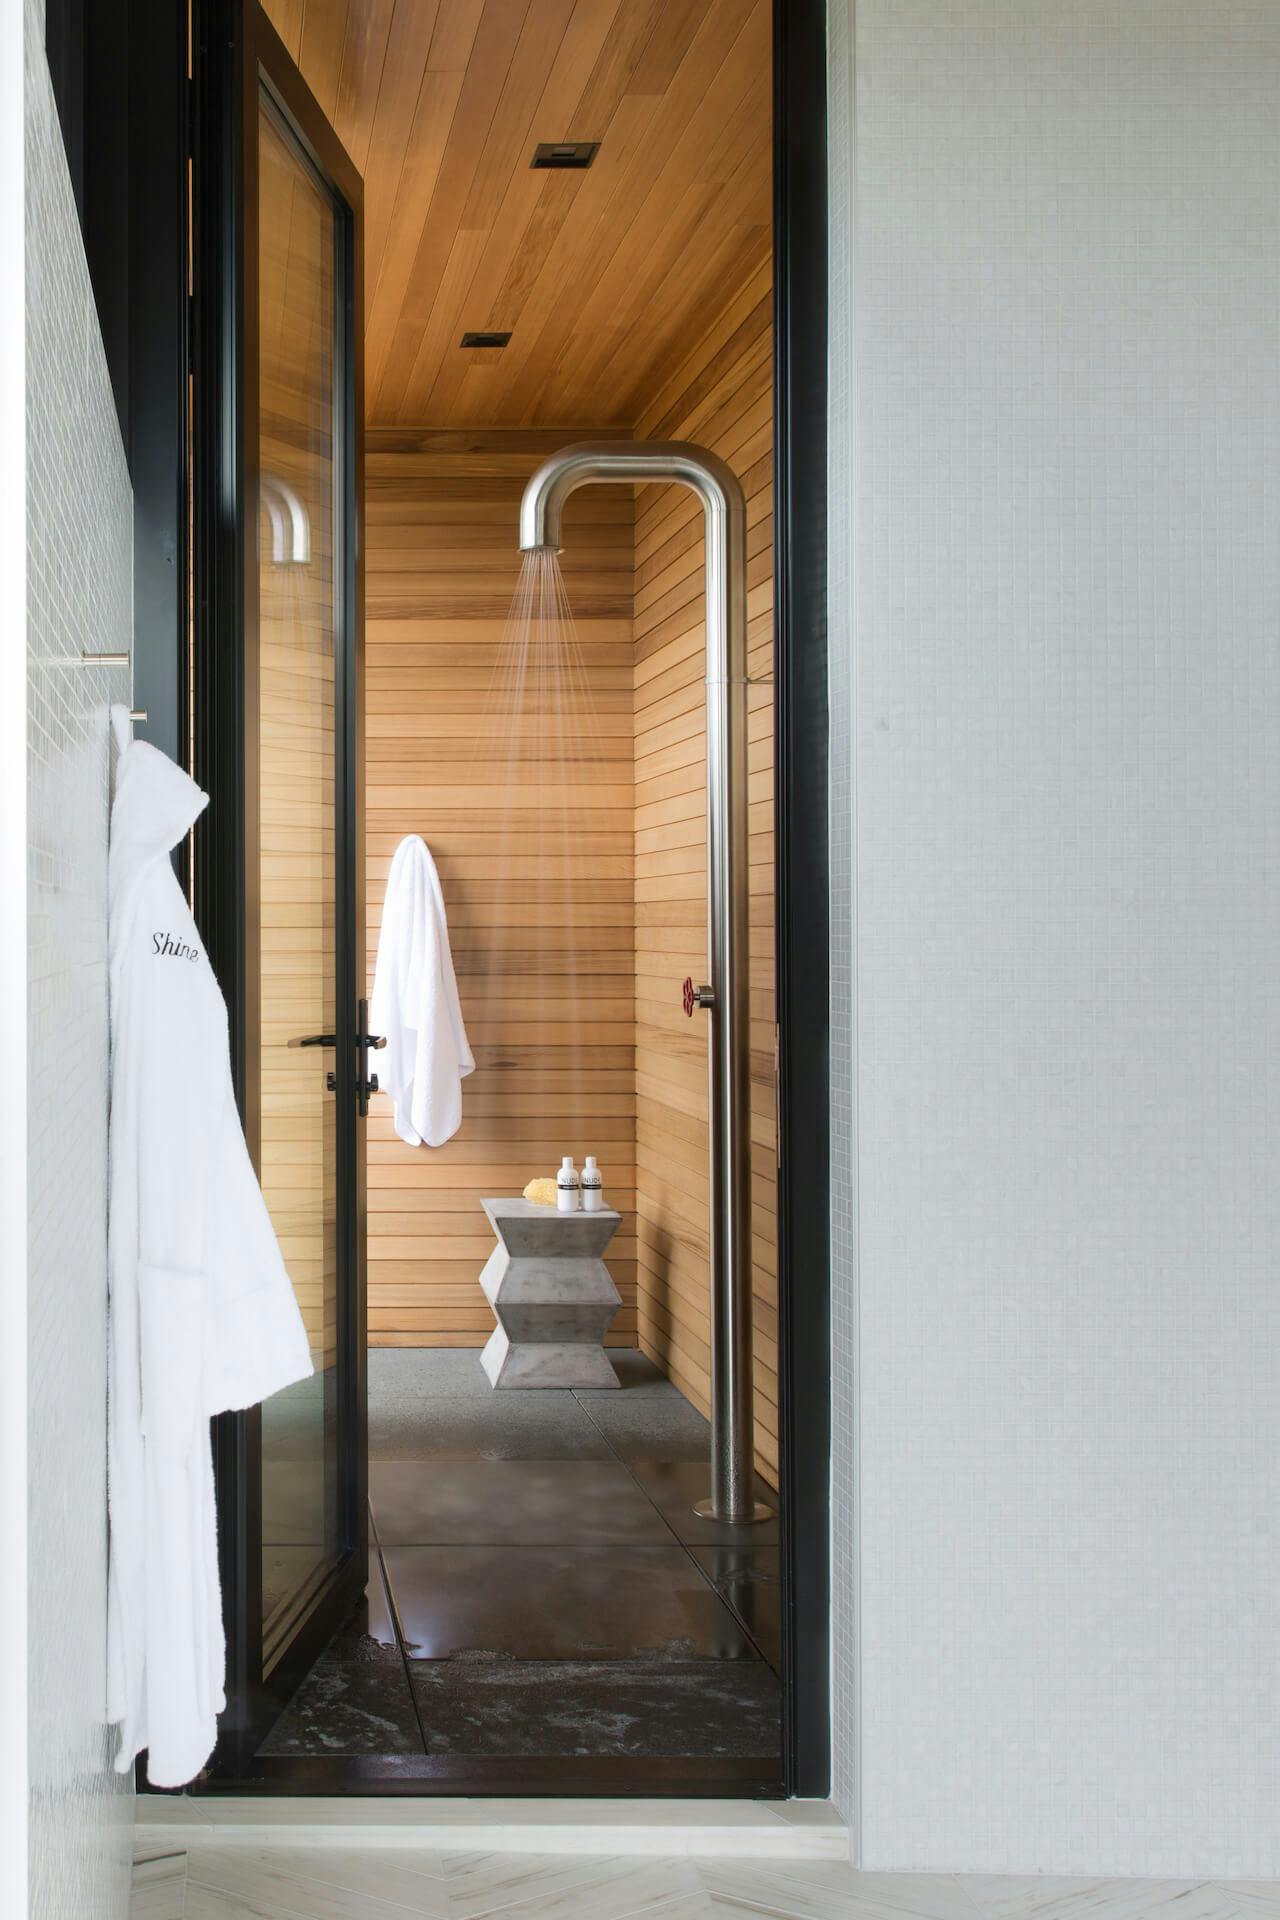 Project E Bathroom Shower Interior